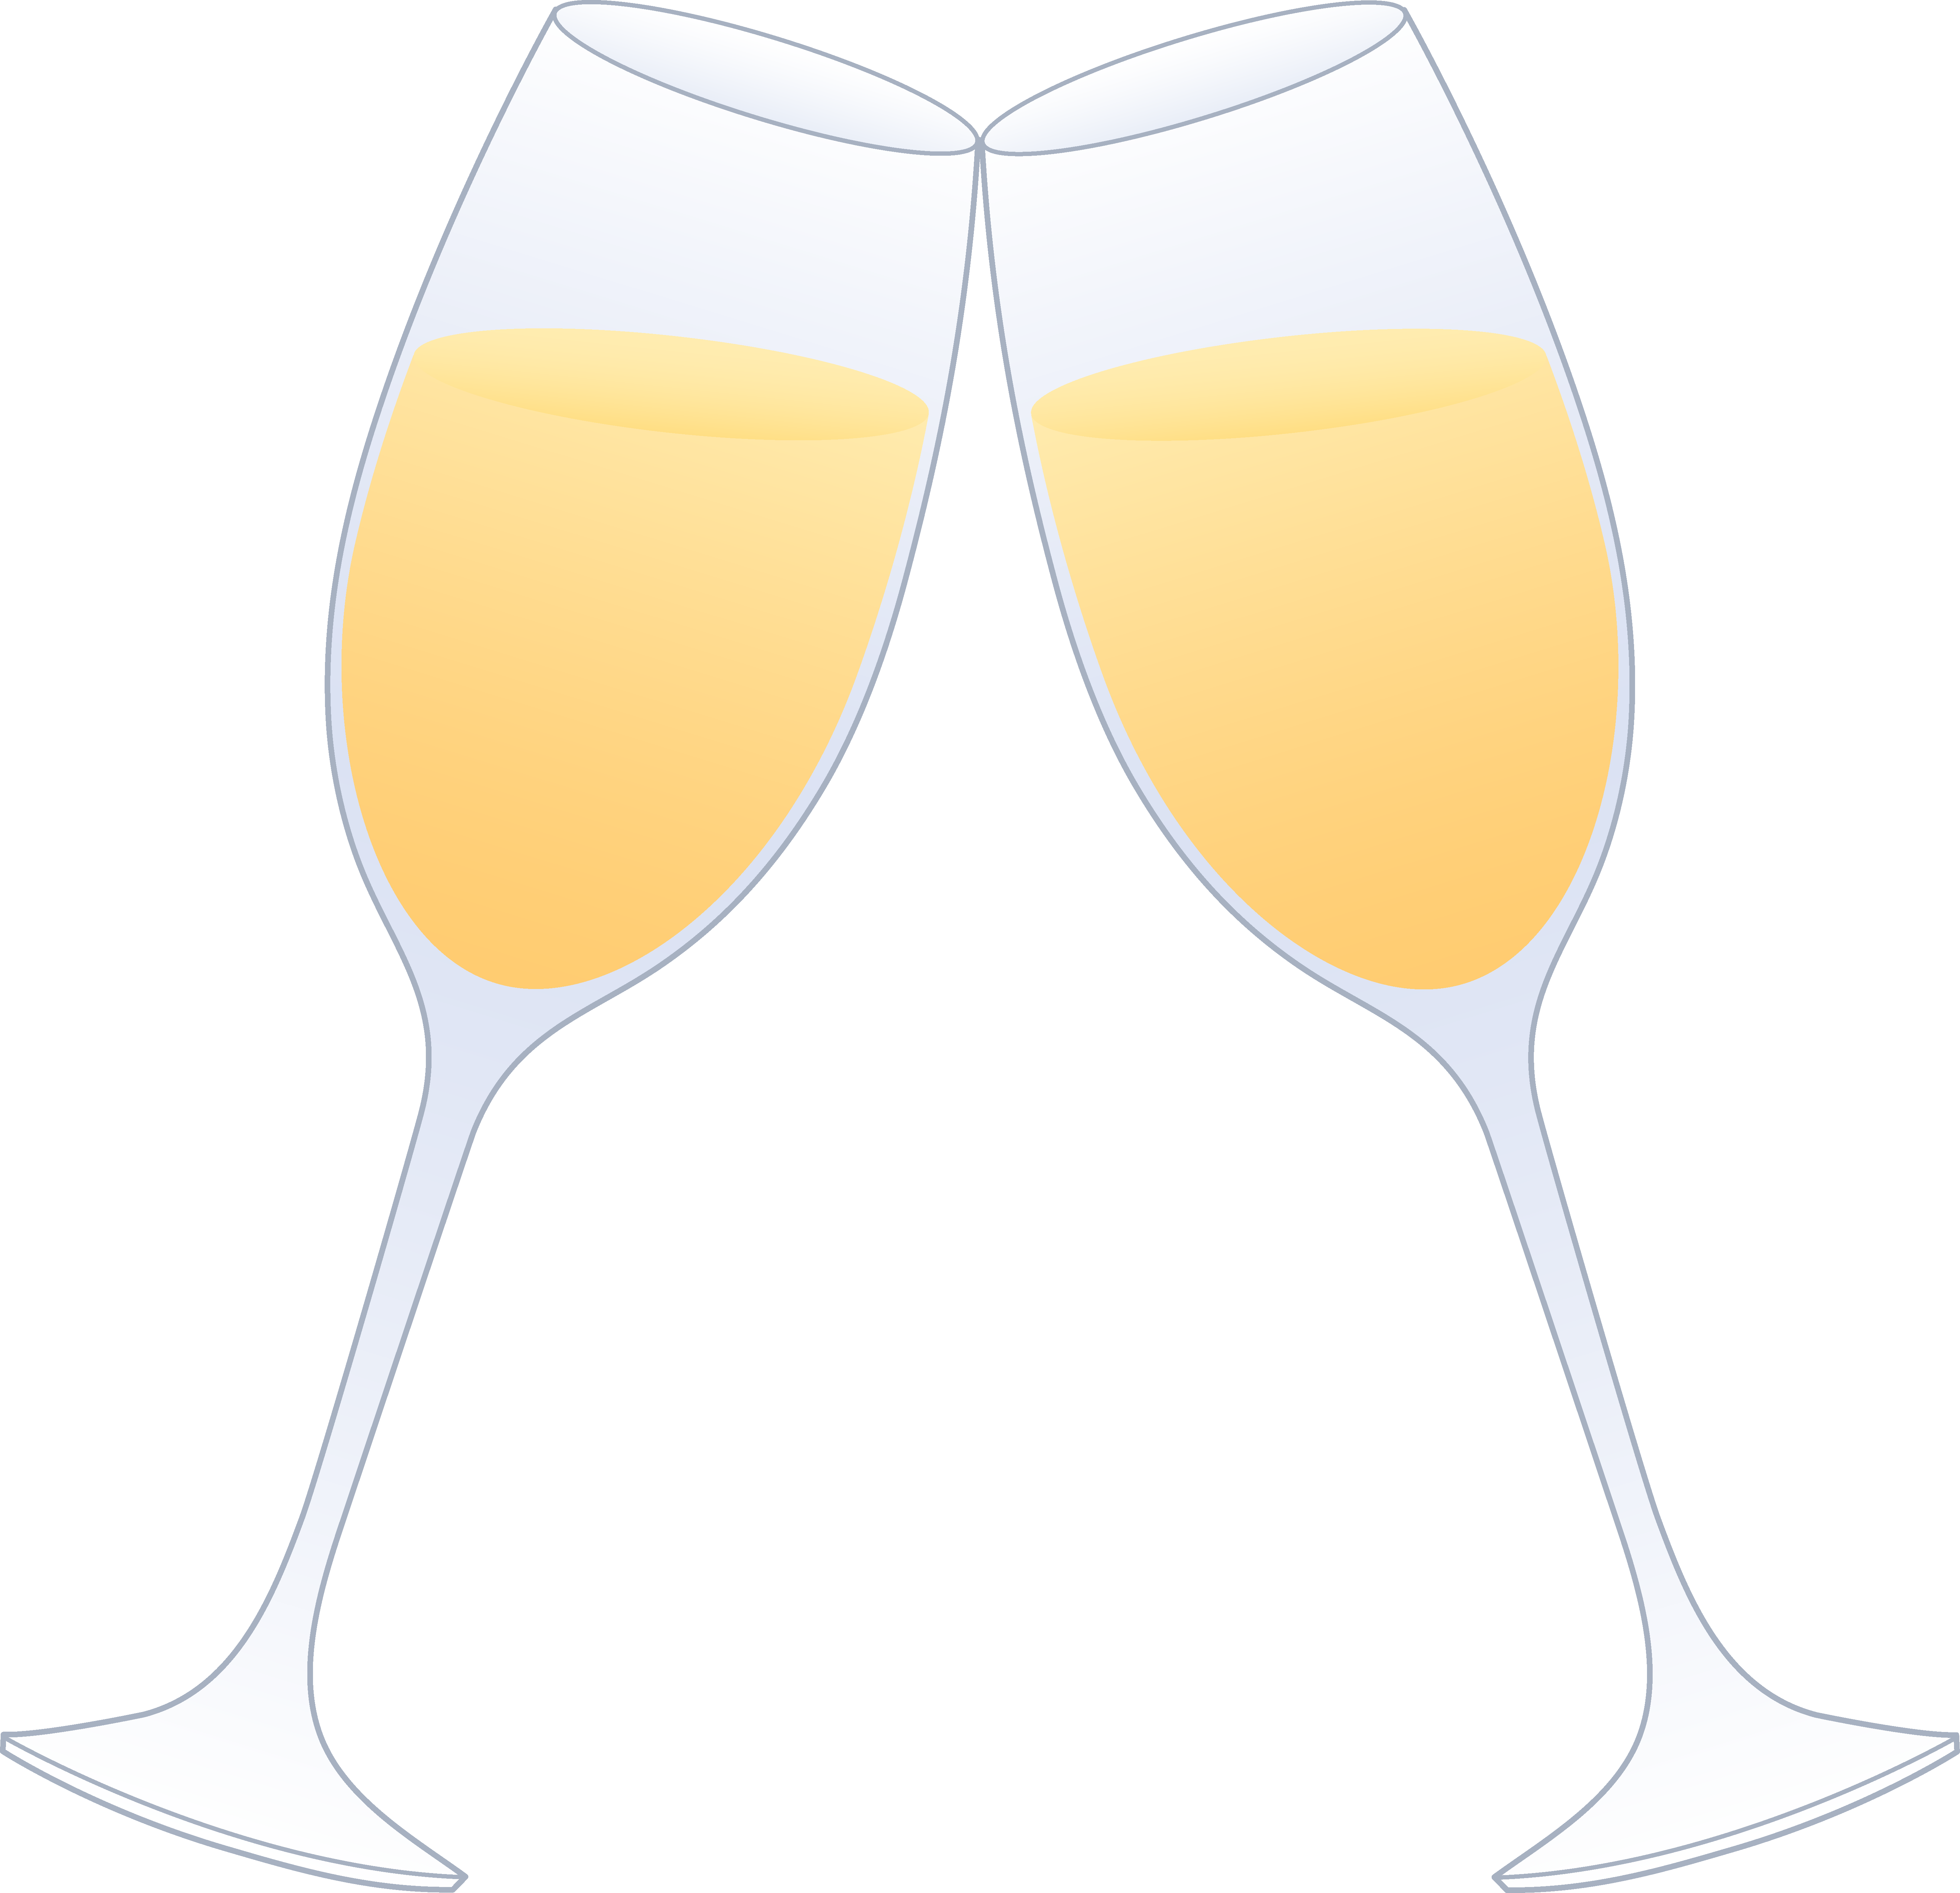 Champagne glasses clip art - ClipartFox